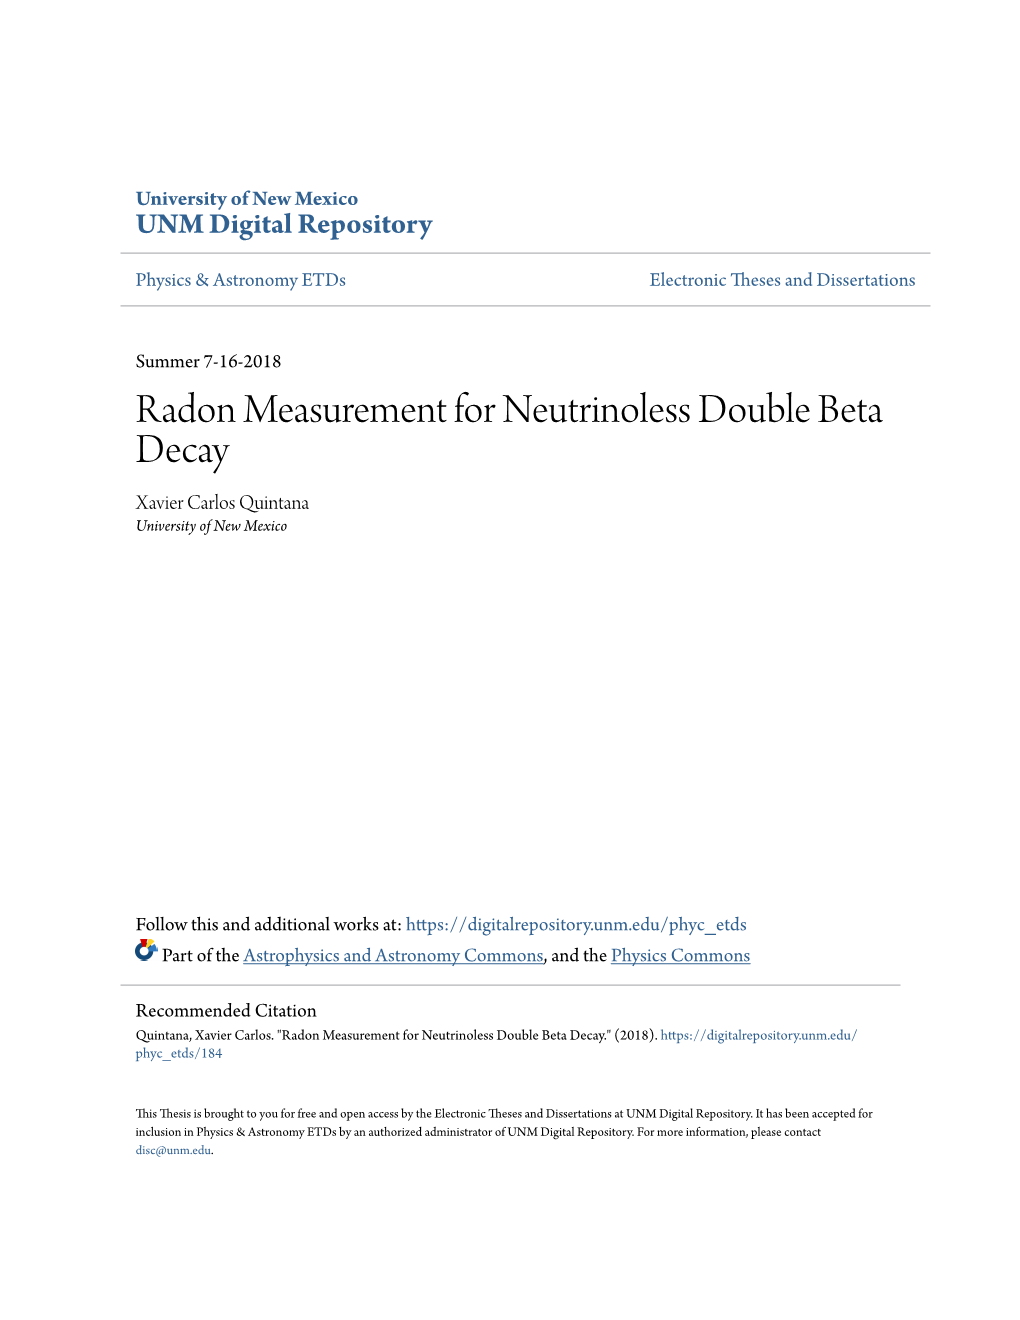 Radon Measurement for Neutrinoless Double Beta Decay Xavier Carlos Quintana University of New Mexico